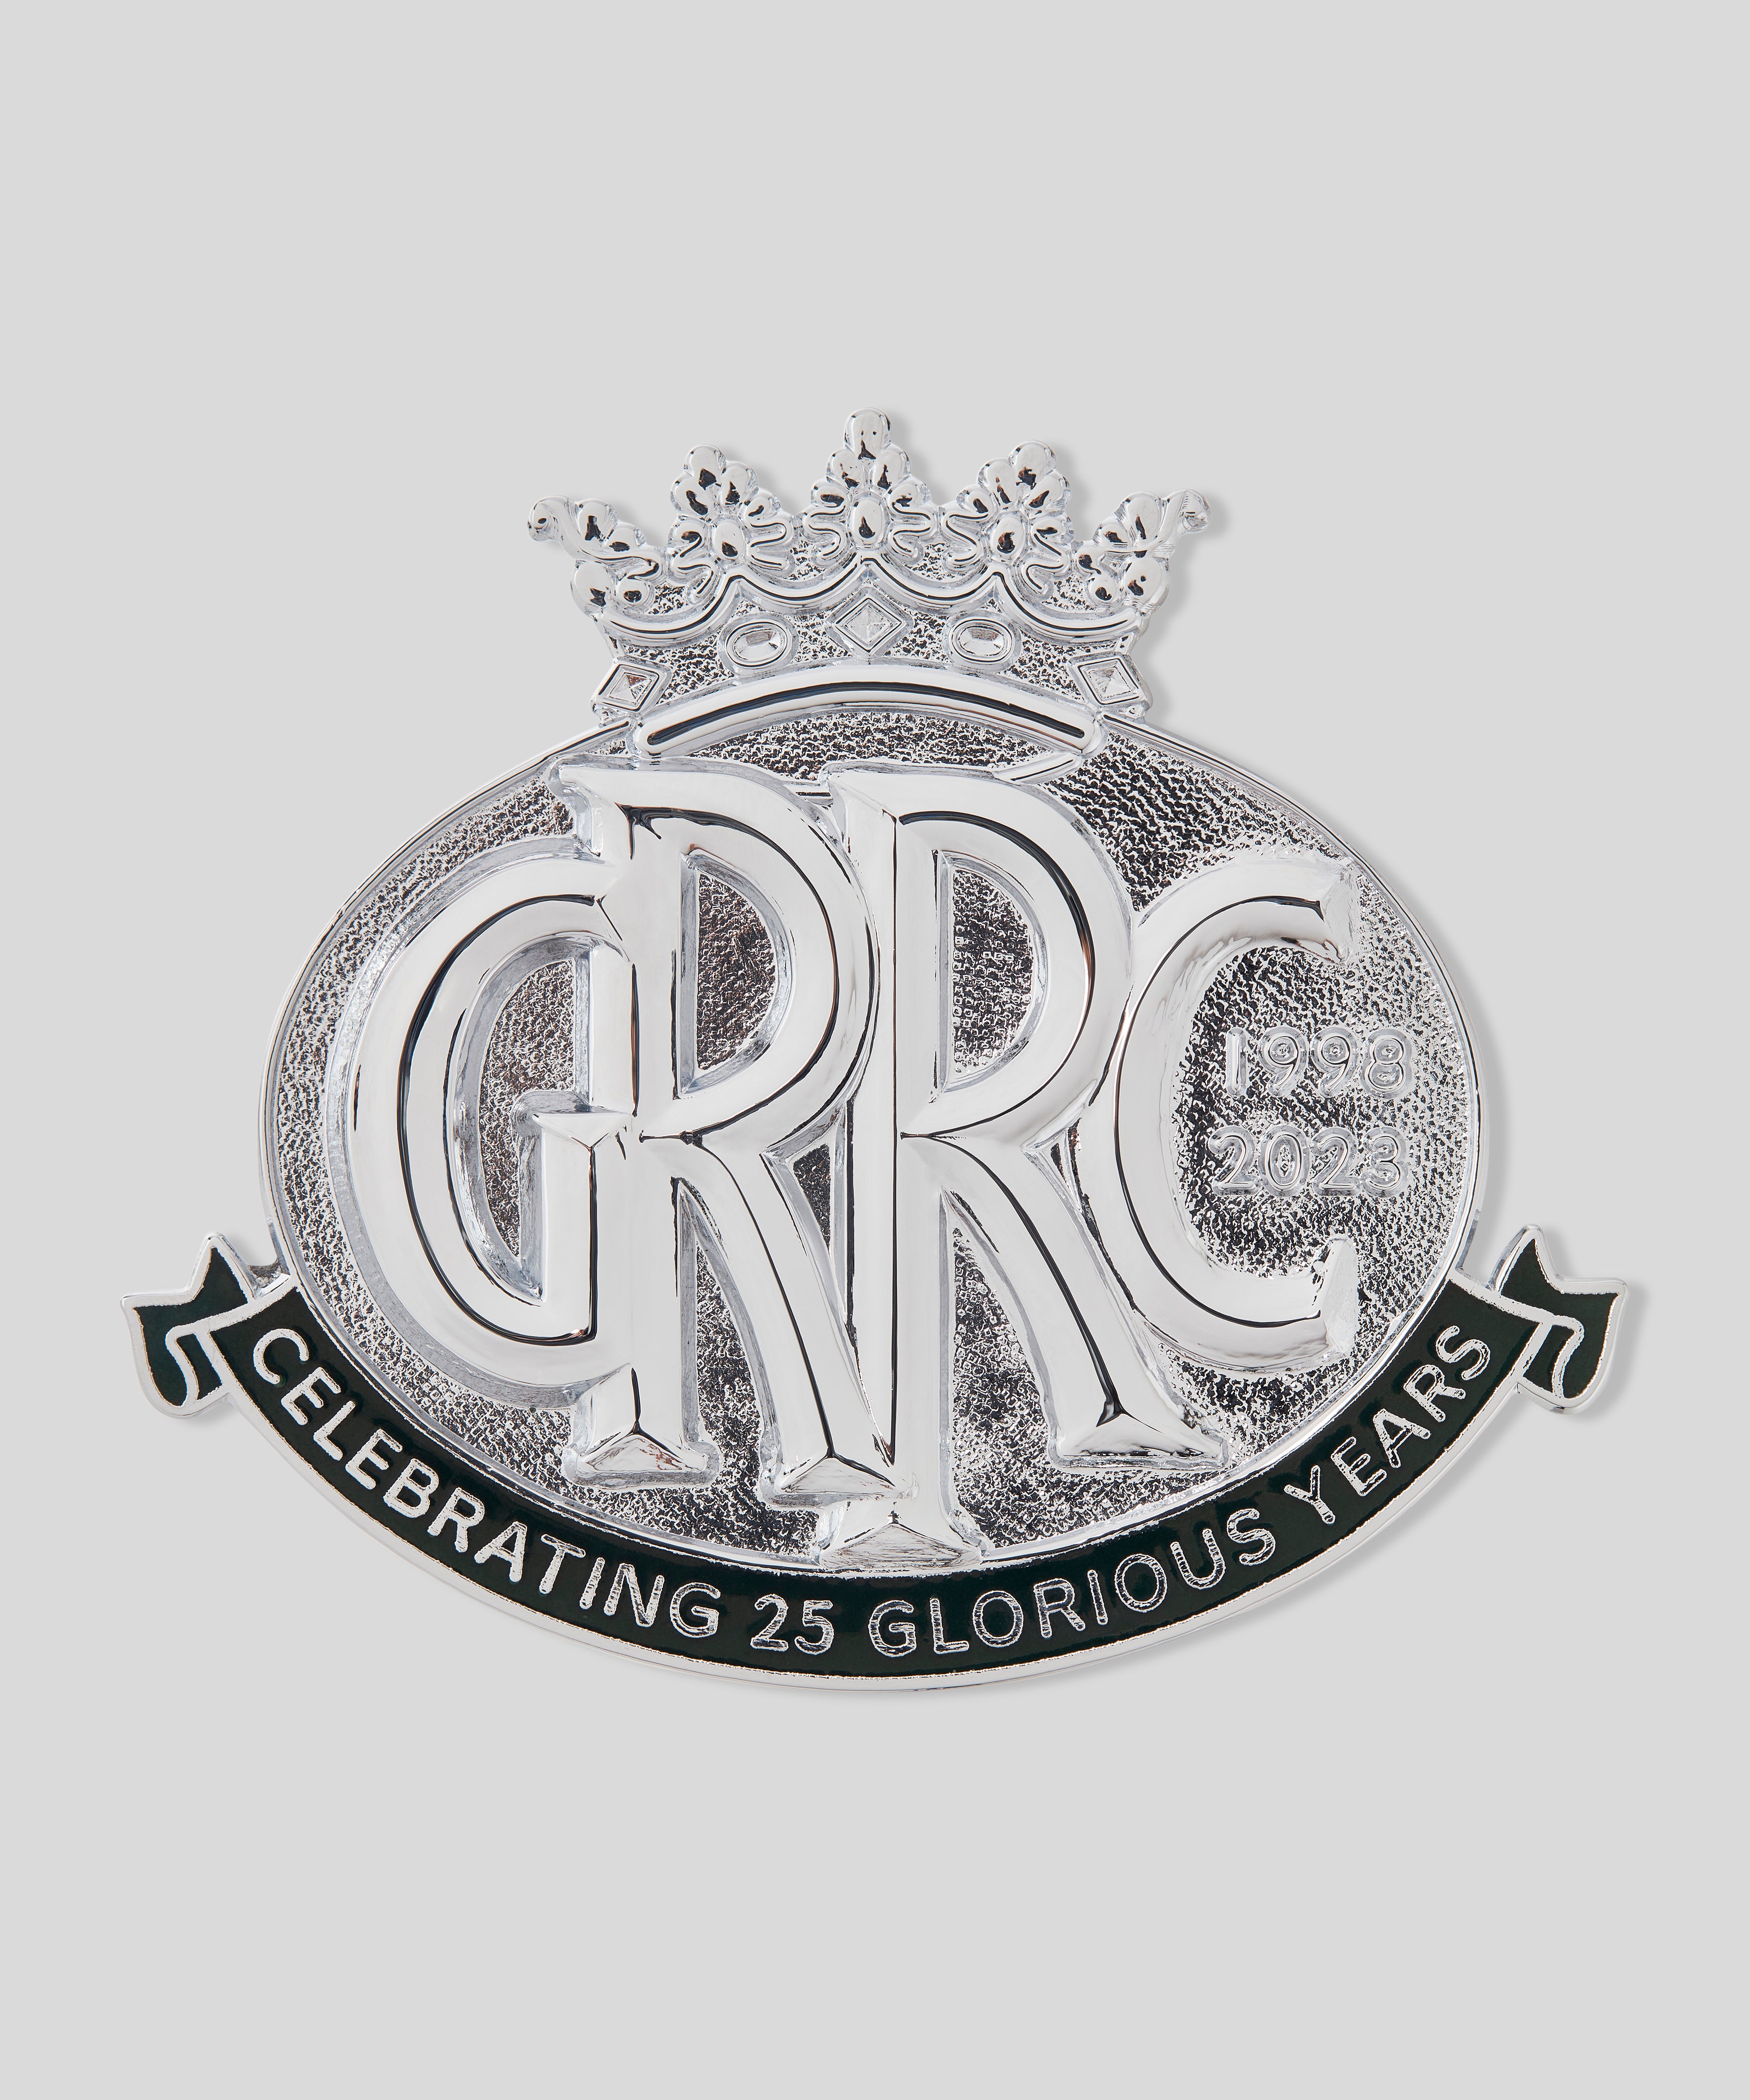 GRRC Members – The Goodwood Shop